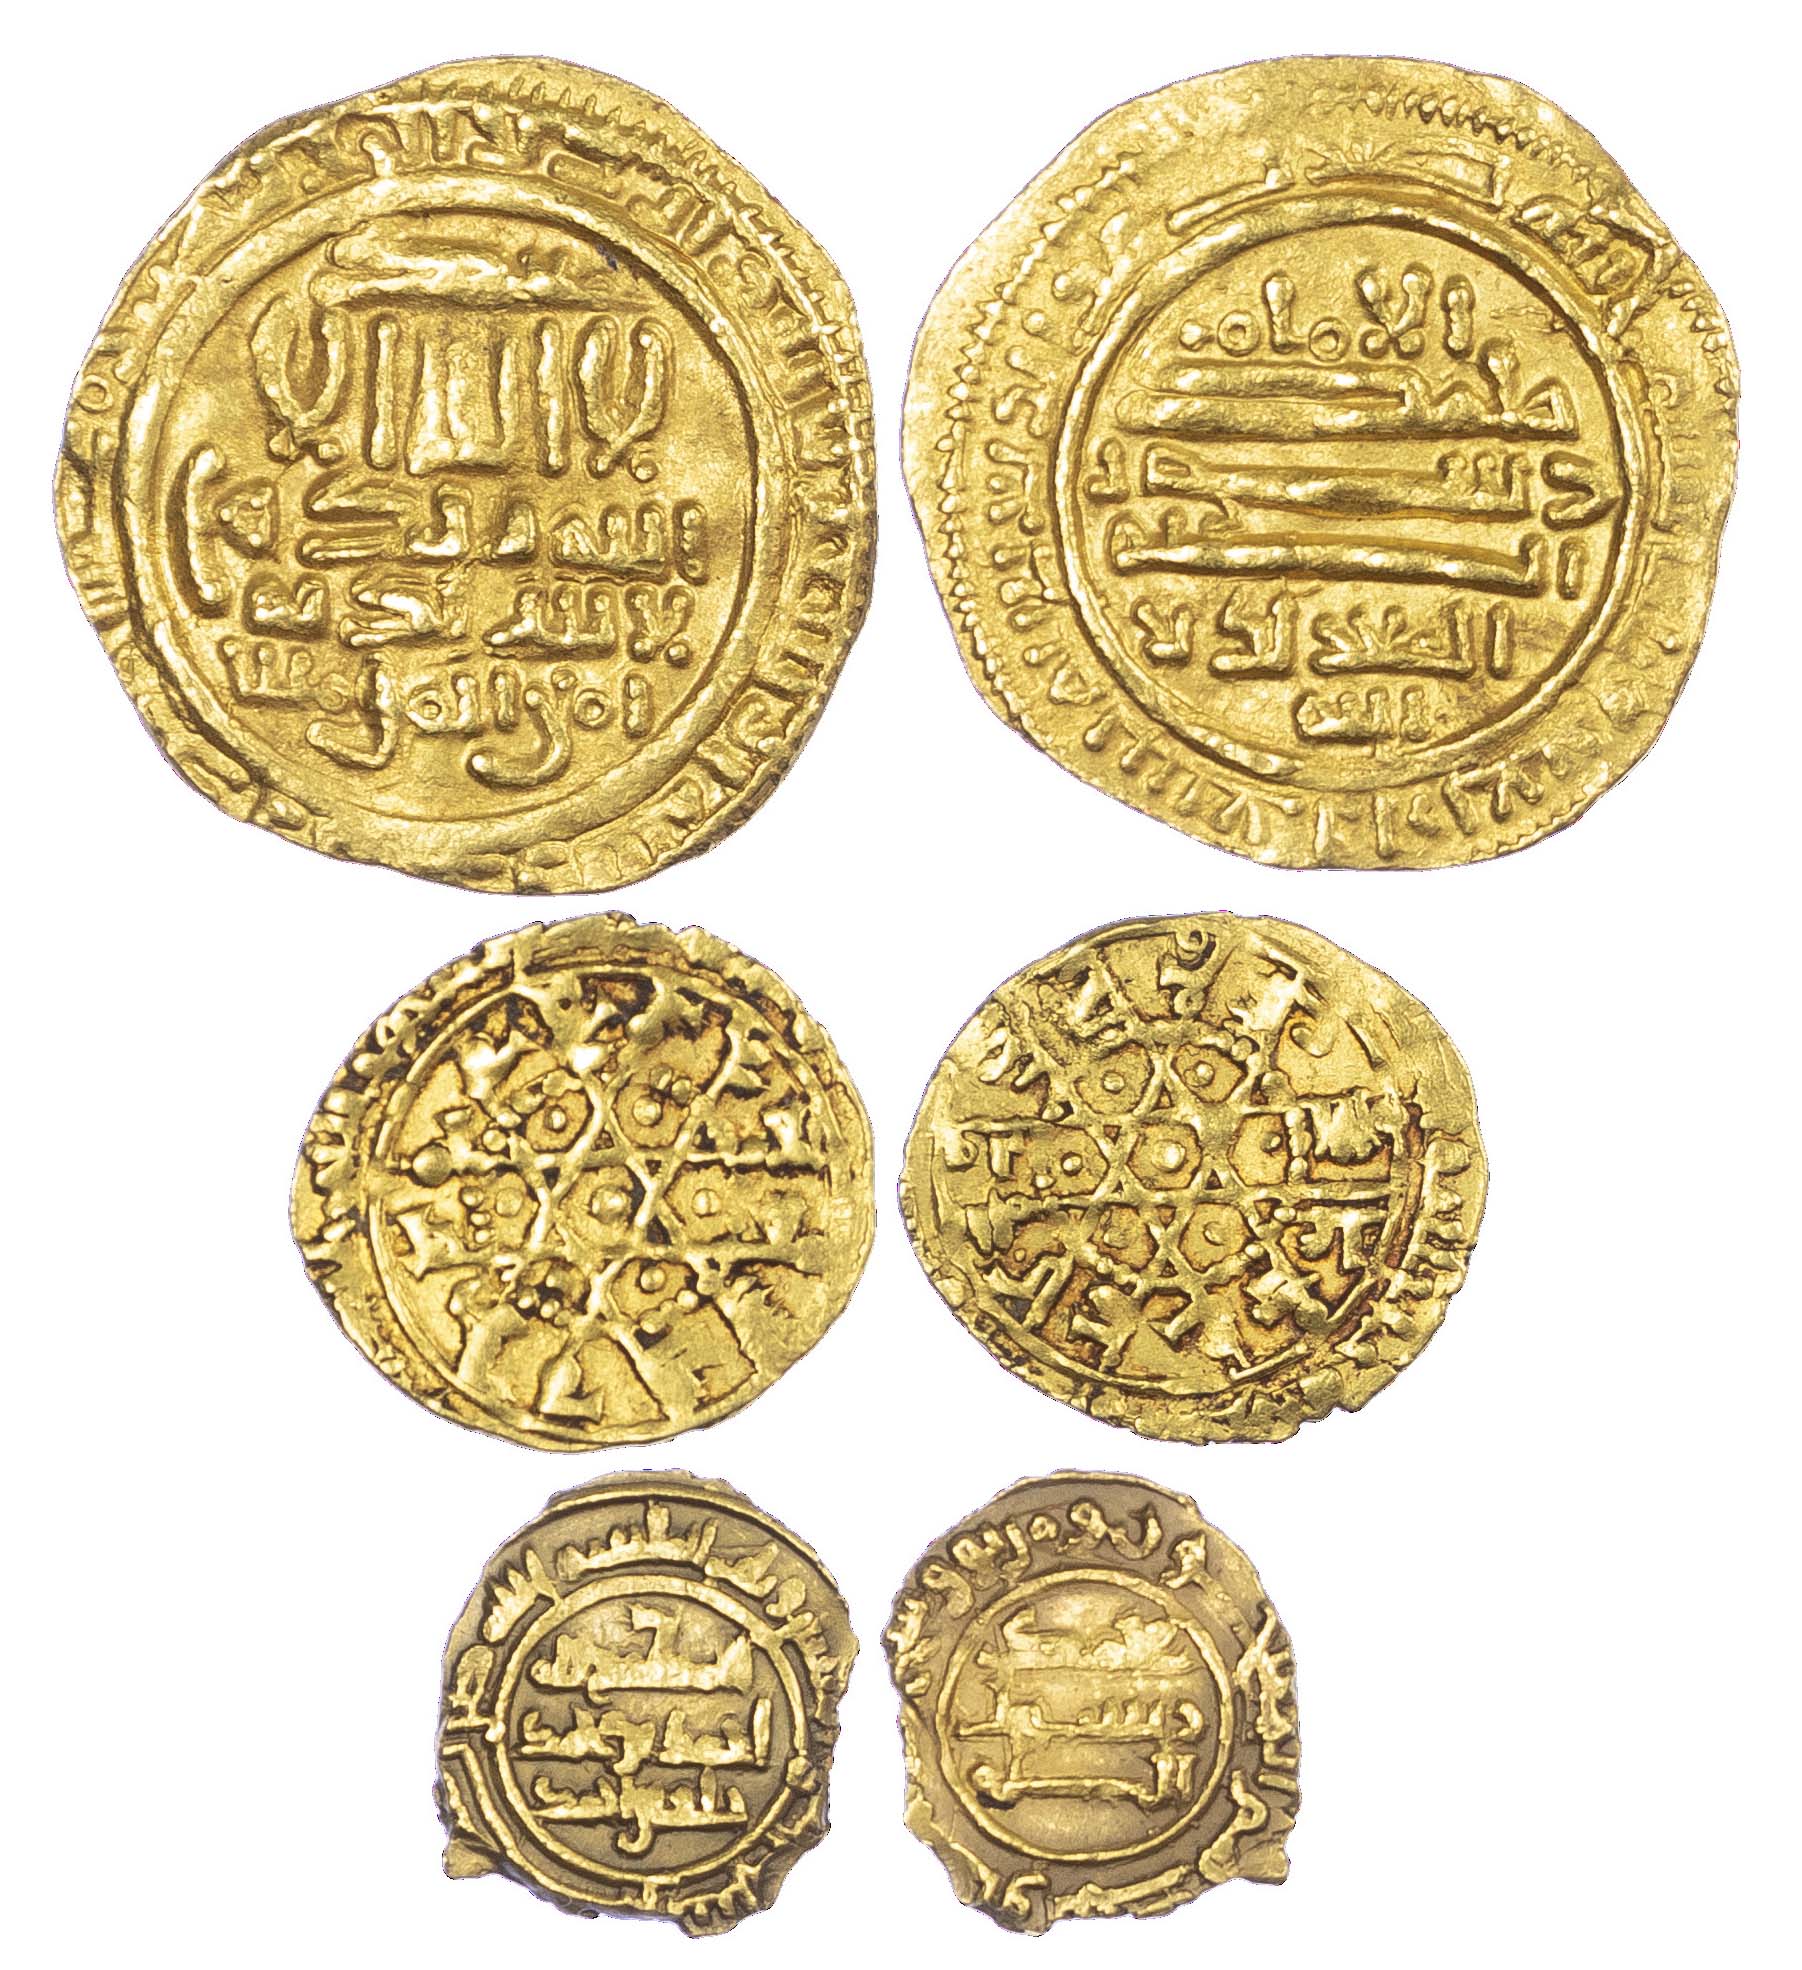 Egypt, Fatimid, al-Mu’izz gold Dinar, al-Mustansir Quarter Dinars - rare types (3 coins)